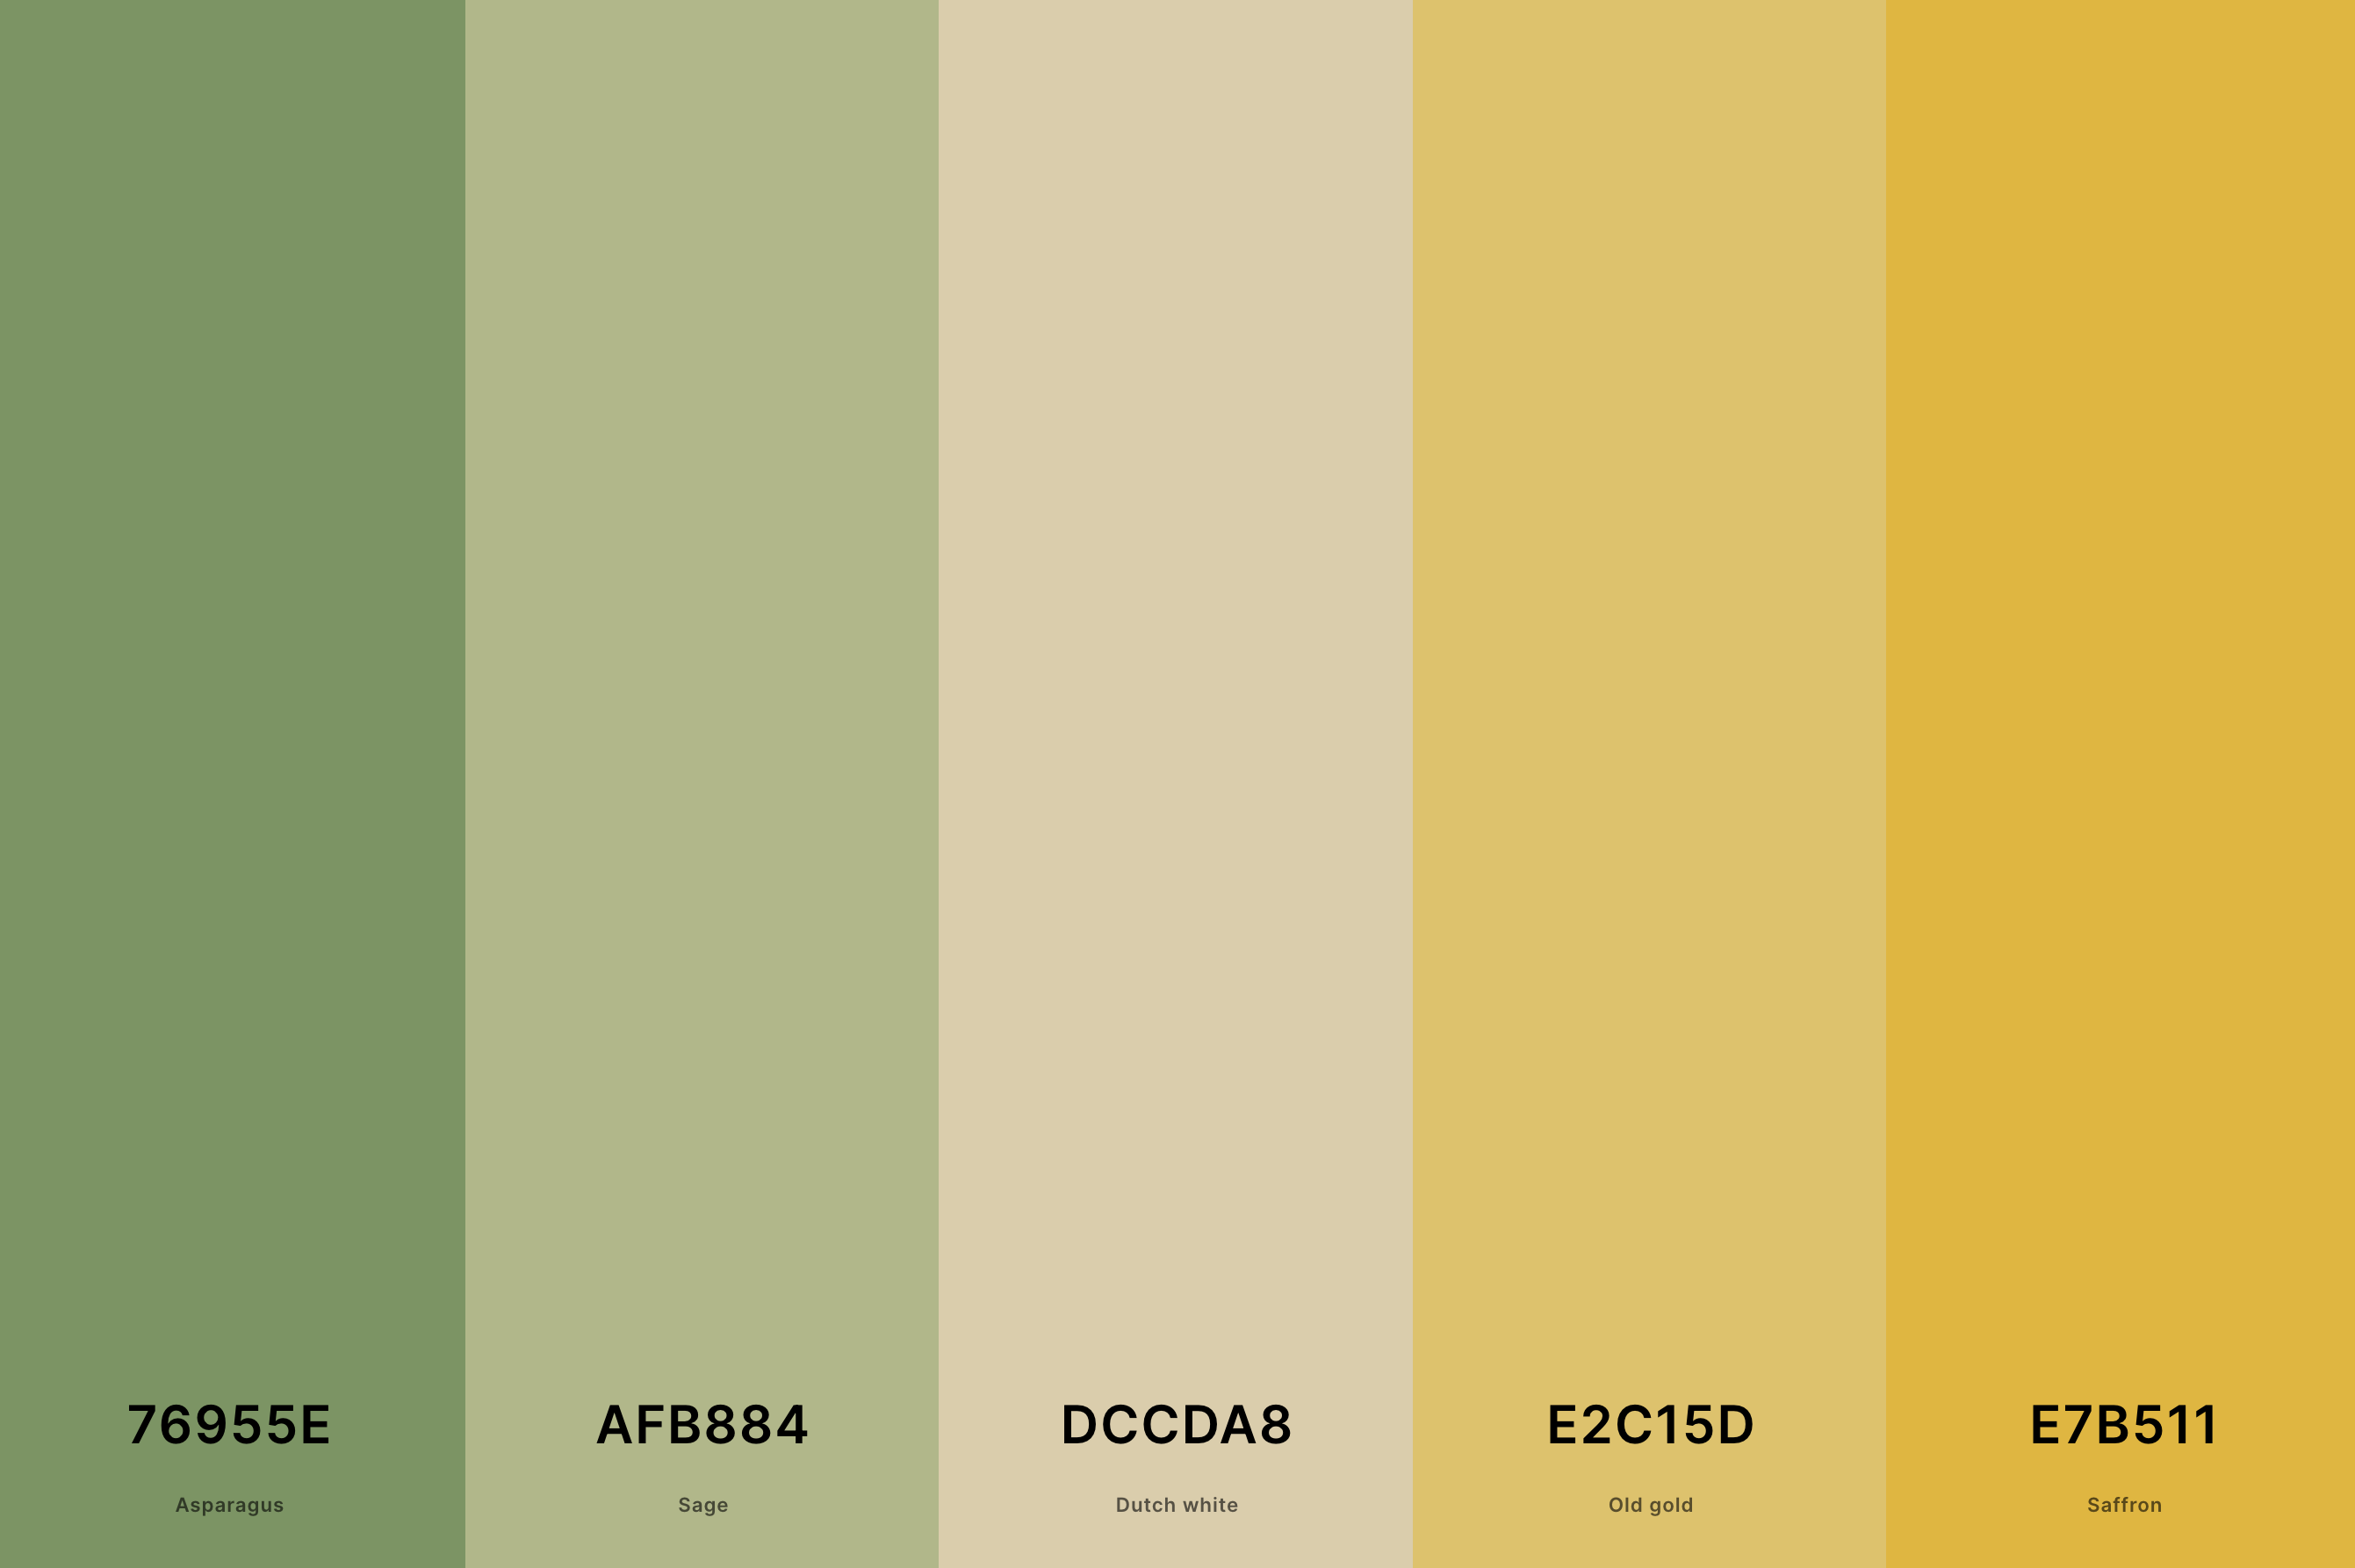 24. Sage Green And Yellow Color Palette Color Palette with Asparagus (Hex #76955E) + Sage (Hex #AFB884) + Dutch White (Hex #DCCDA8) + Old Gold (Hex #E2C15D) + Saffron (Hex #E7B511) Color Palette with Hex Codes